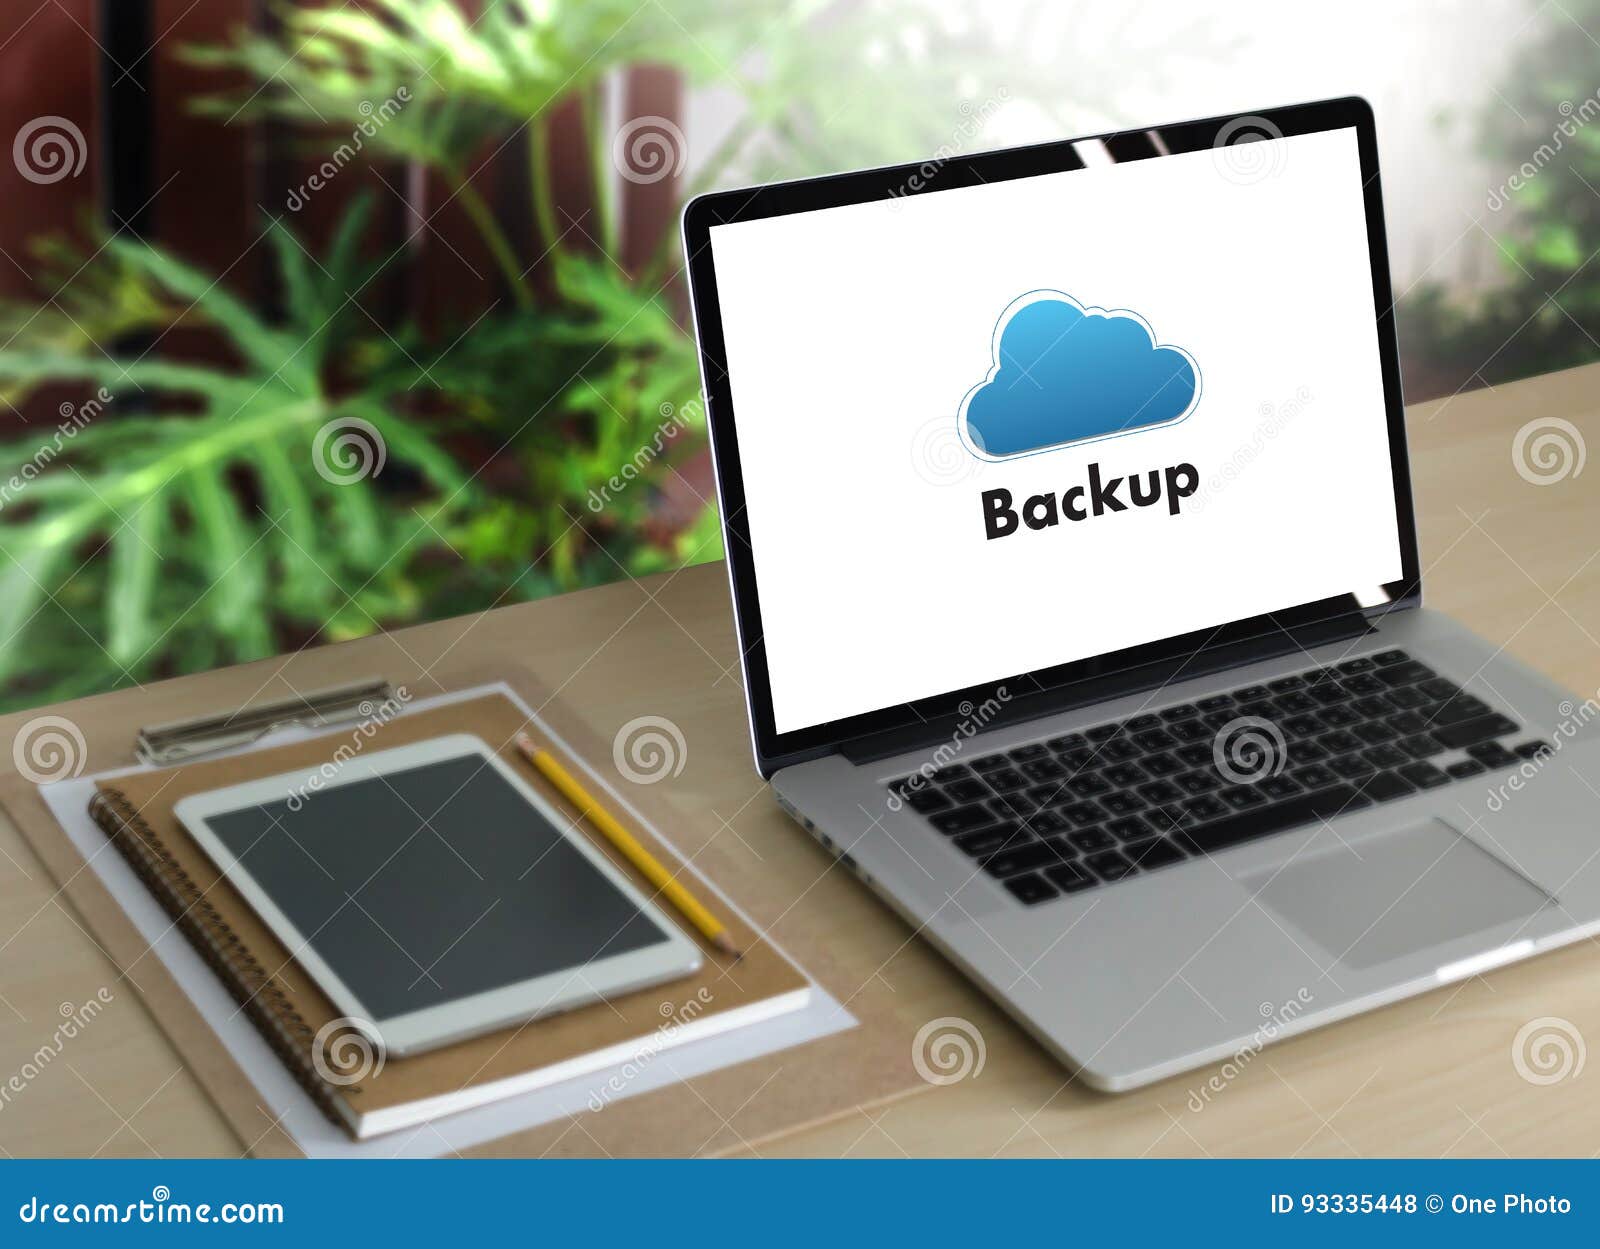 backup download copies of data, computing digital data transferring